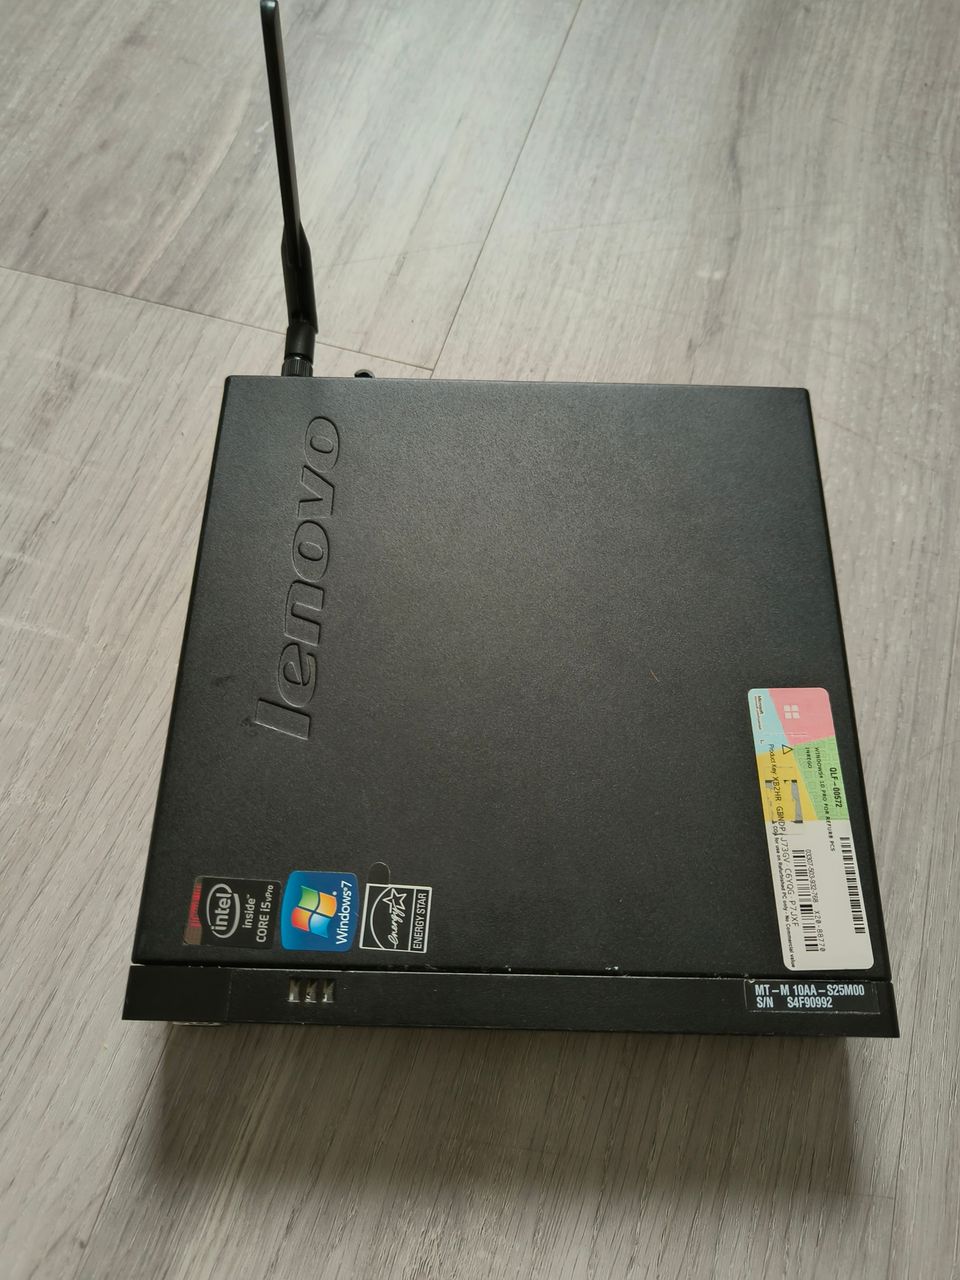 Lenovo Thinkcentre M93p (tiny)